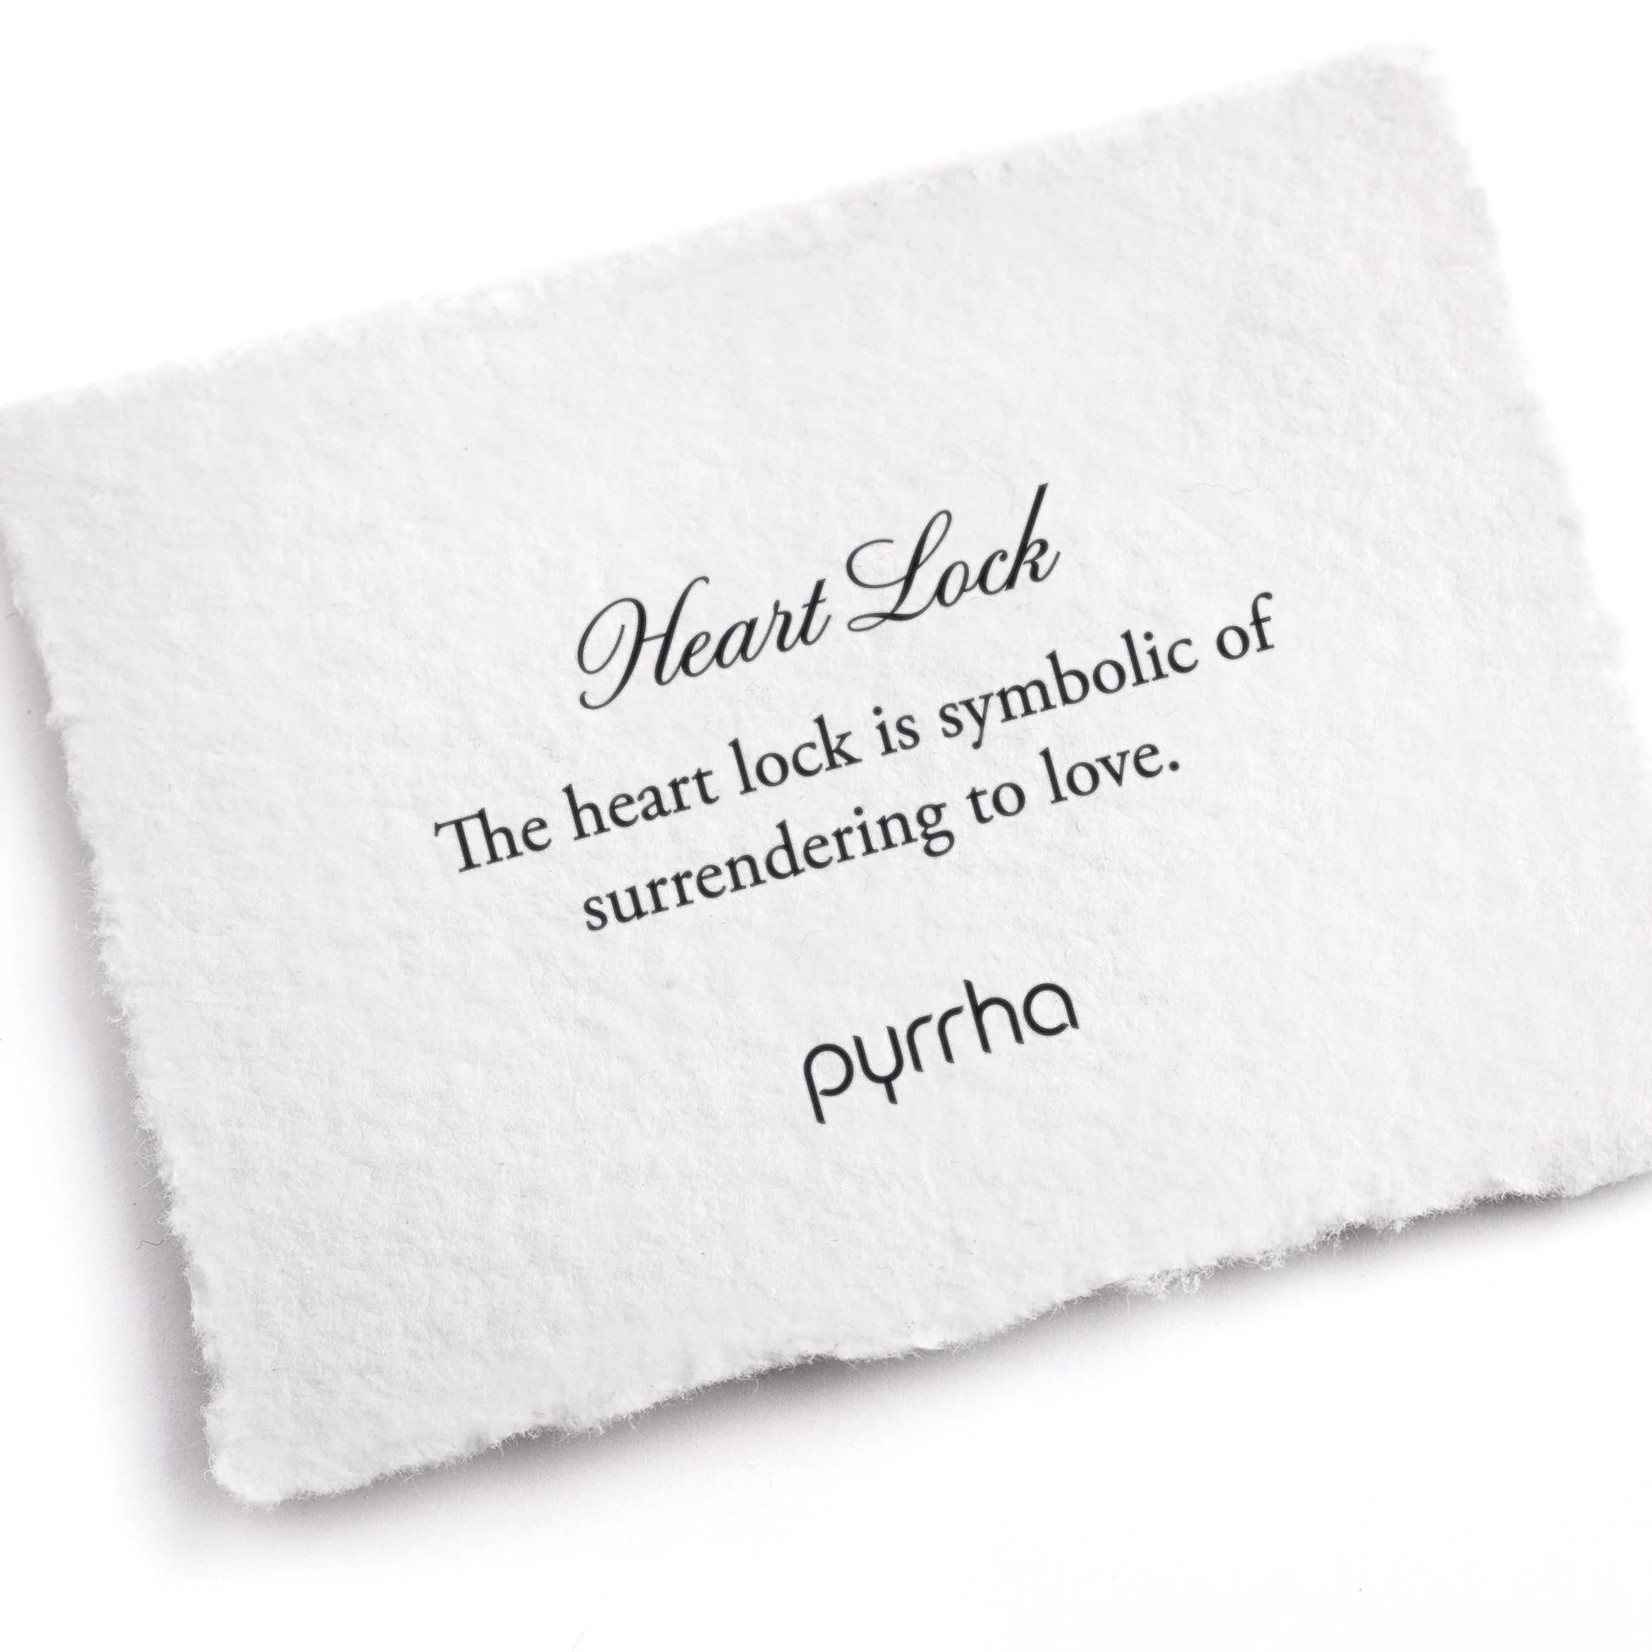 Pyrrha Heart Lock 14K Gold Symbol Charm